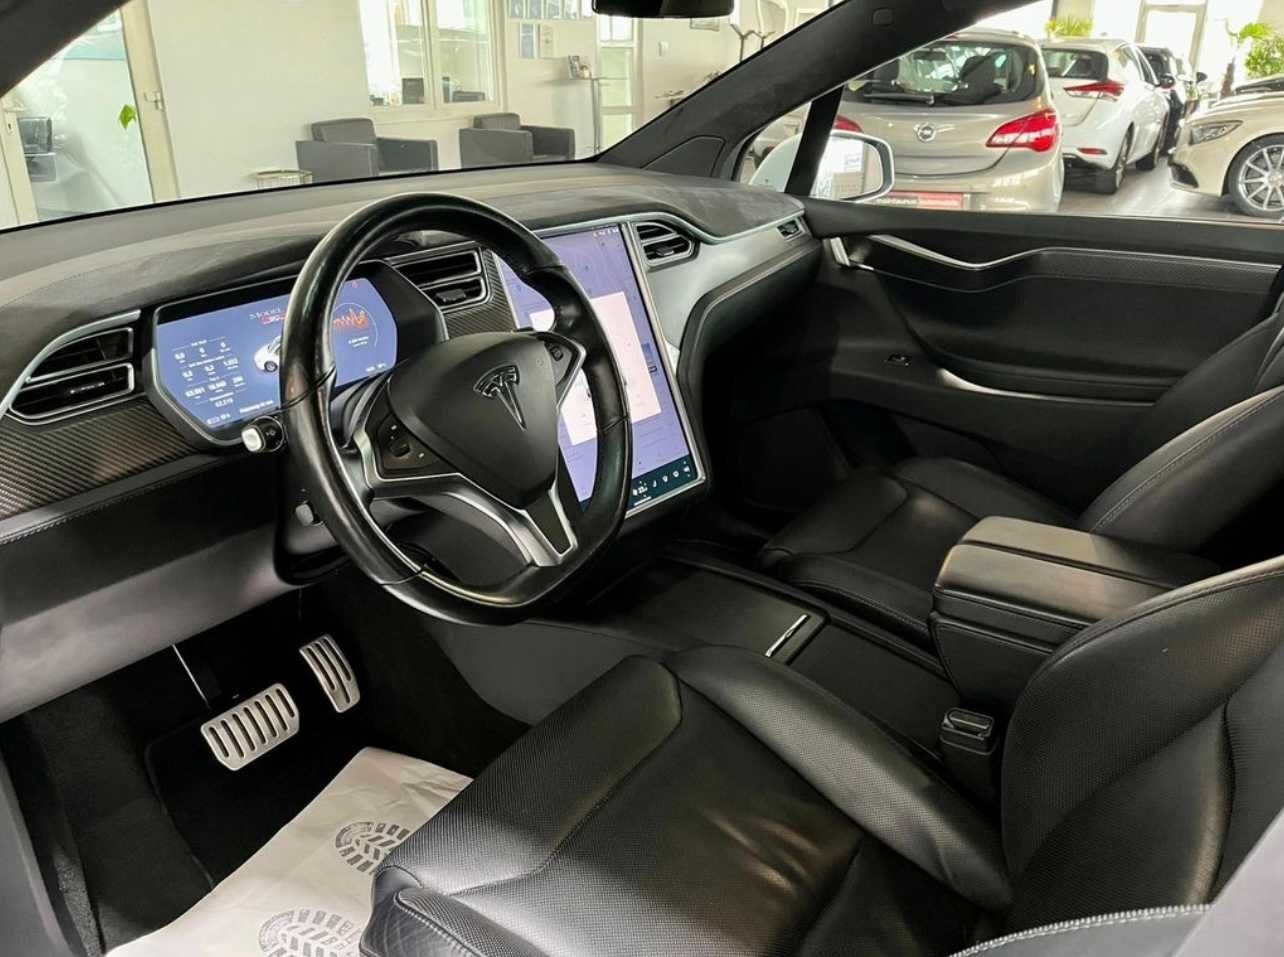 Tesla Model X 100D 2017 р. з Європи!